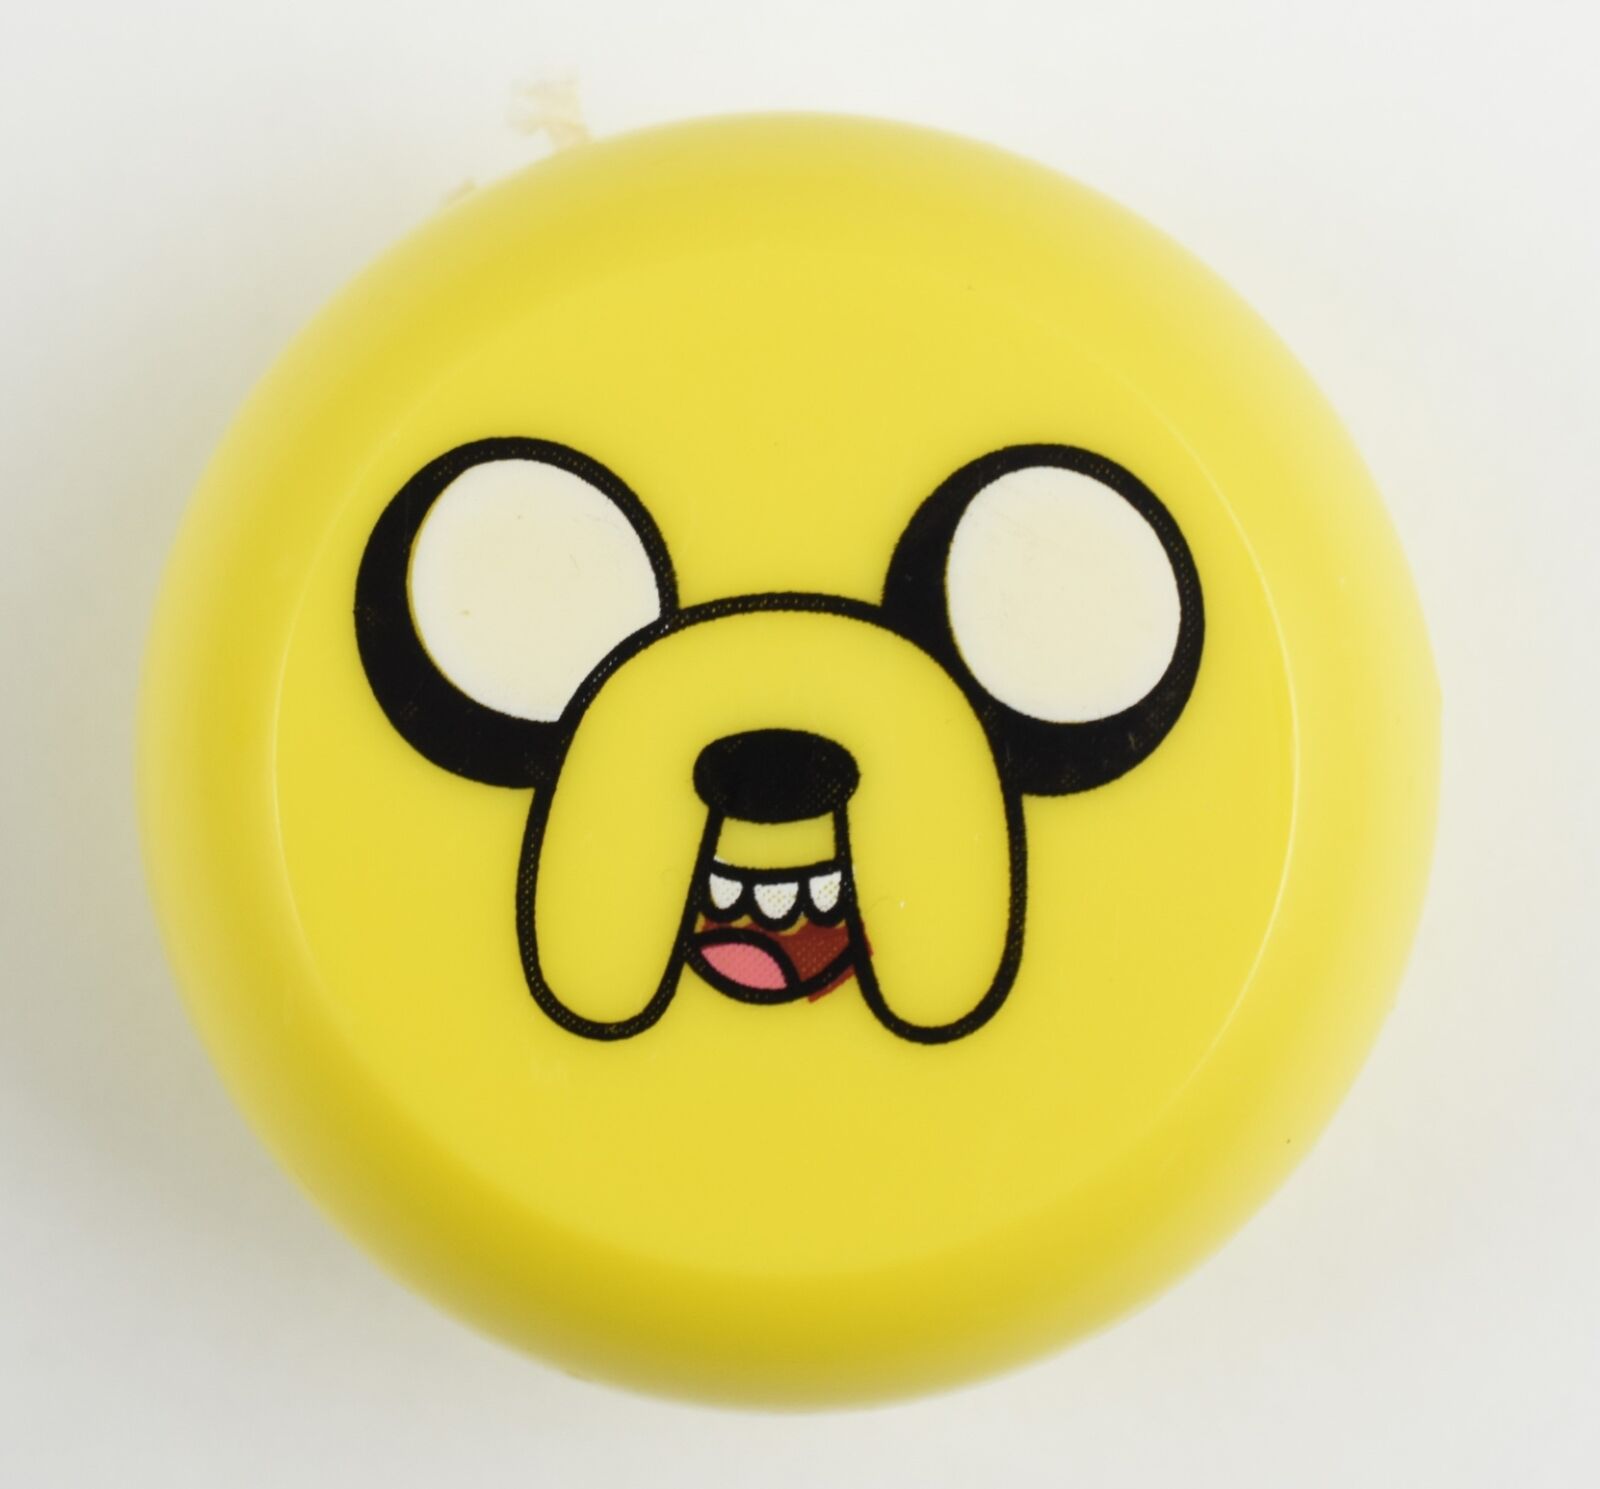 Rare Circa 2012 Jake the Dog Adventure Time Cartoon Network YoYo - New Loose